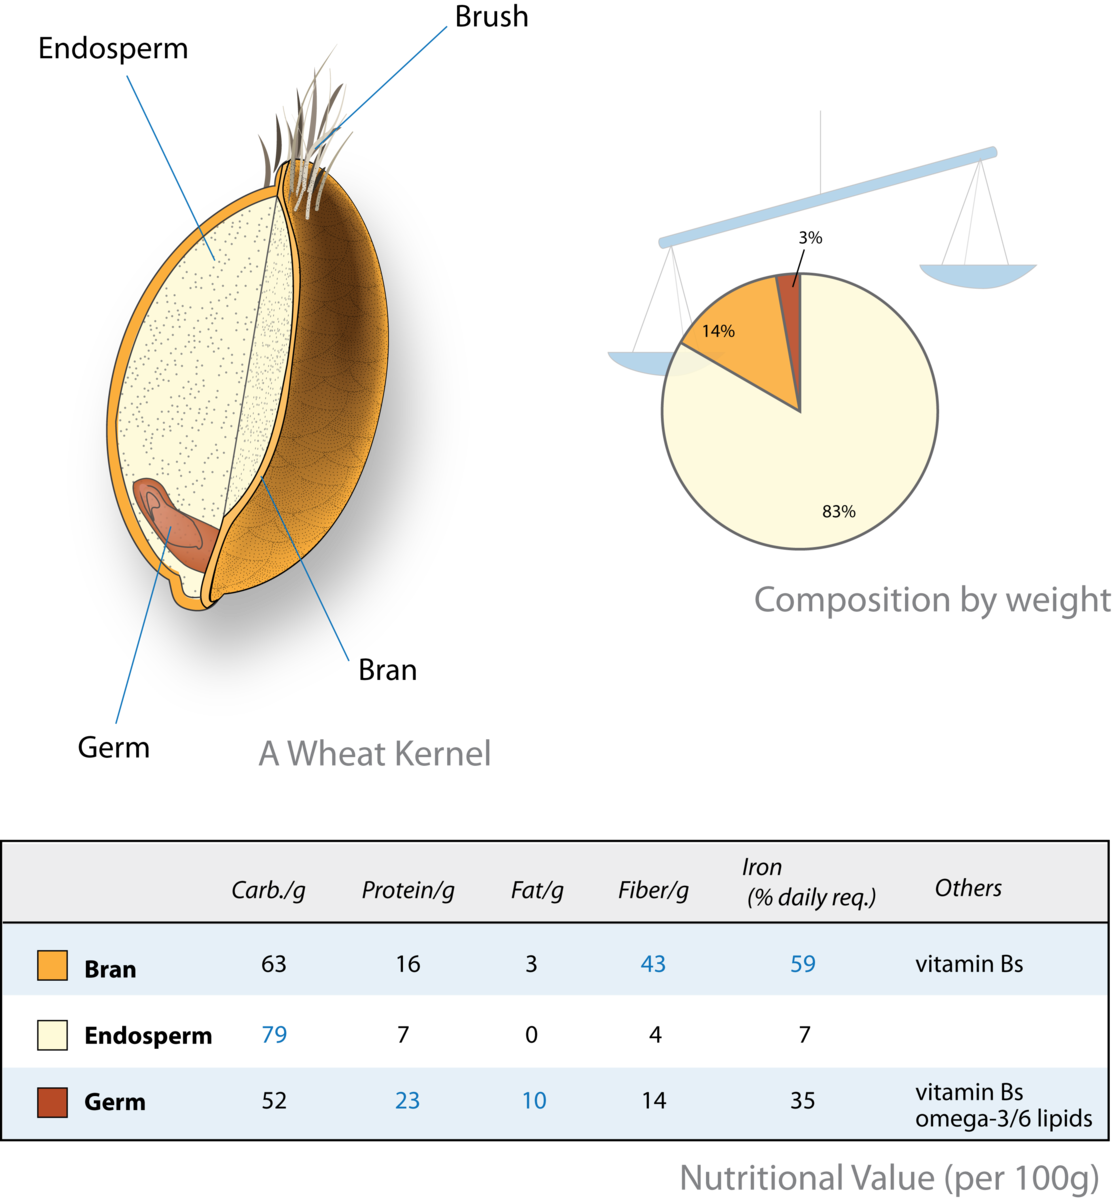 Overview of the wheat kernel by John. C (https://en.wikipedia.org/wiki/File:Wheat-kernel_nutrition.png)